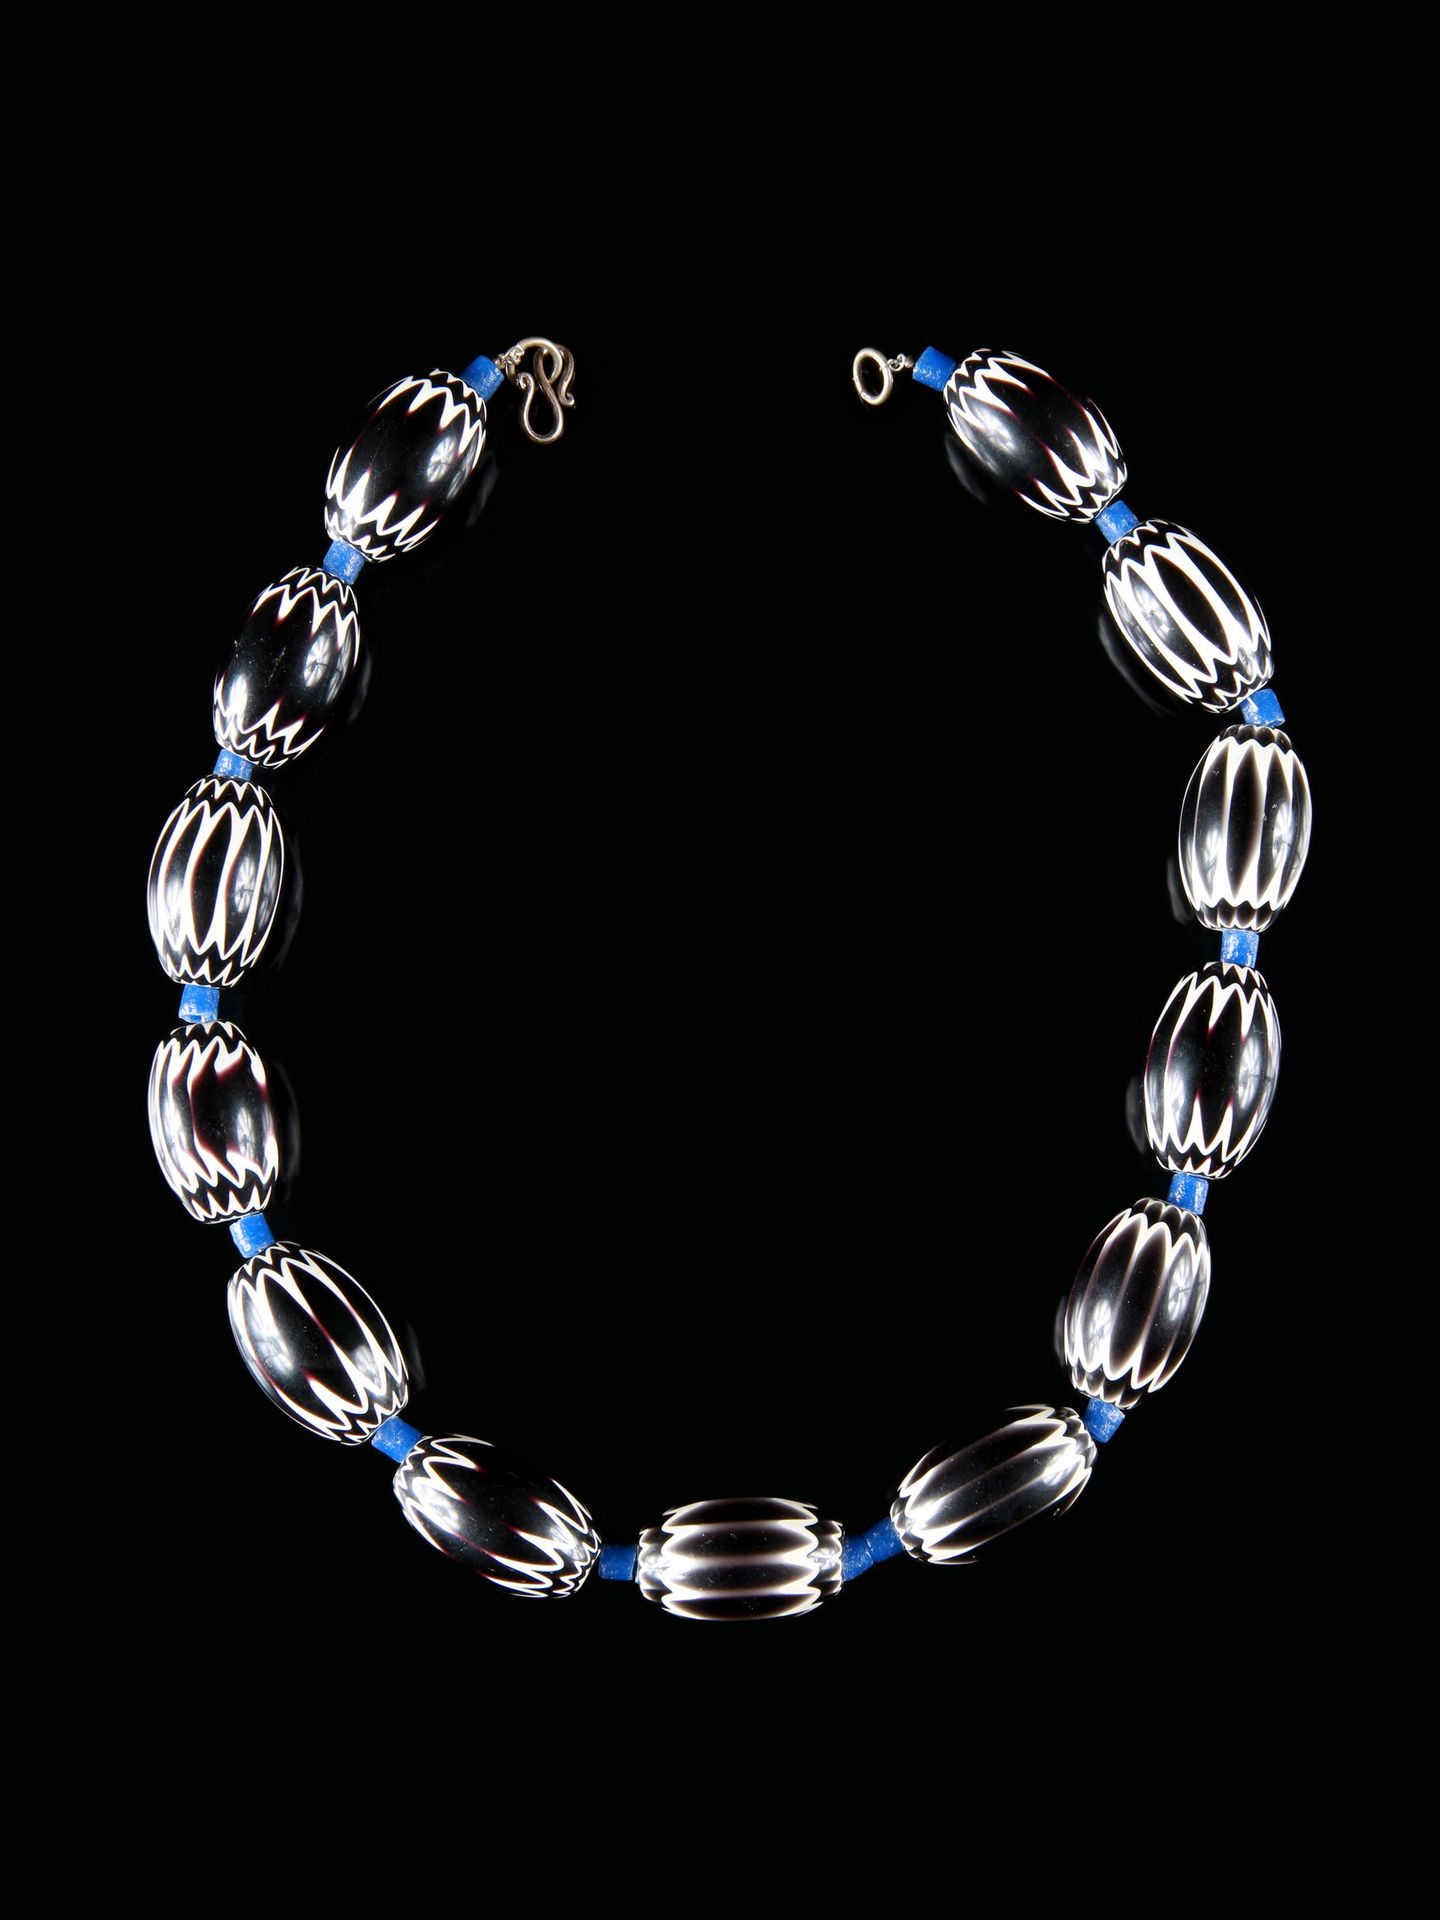 A Chevron Beads Necklace Collier, Chevron-Perlen

Westafrika

Ohne Sockel / with&hellip;